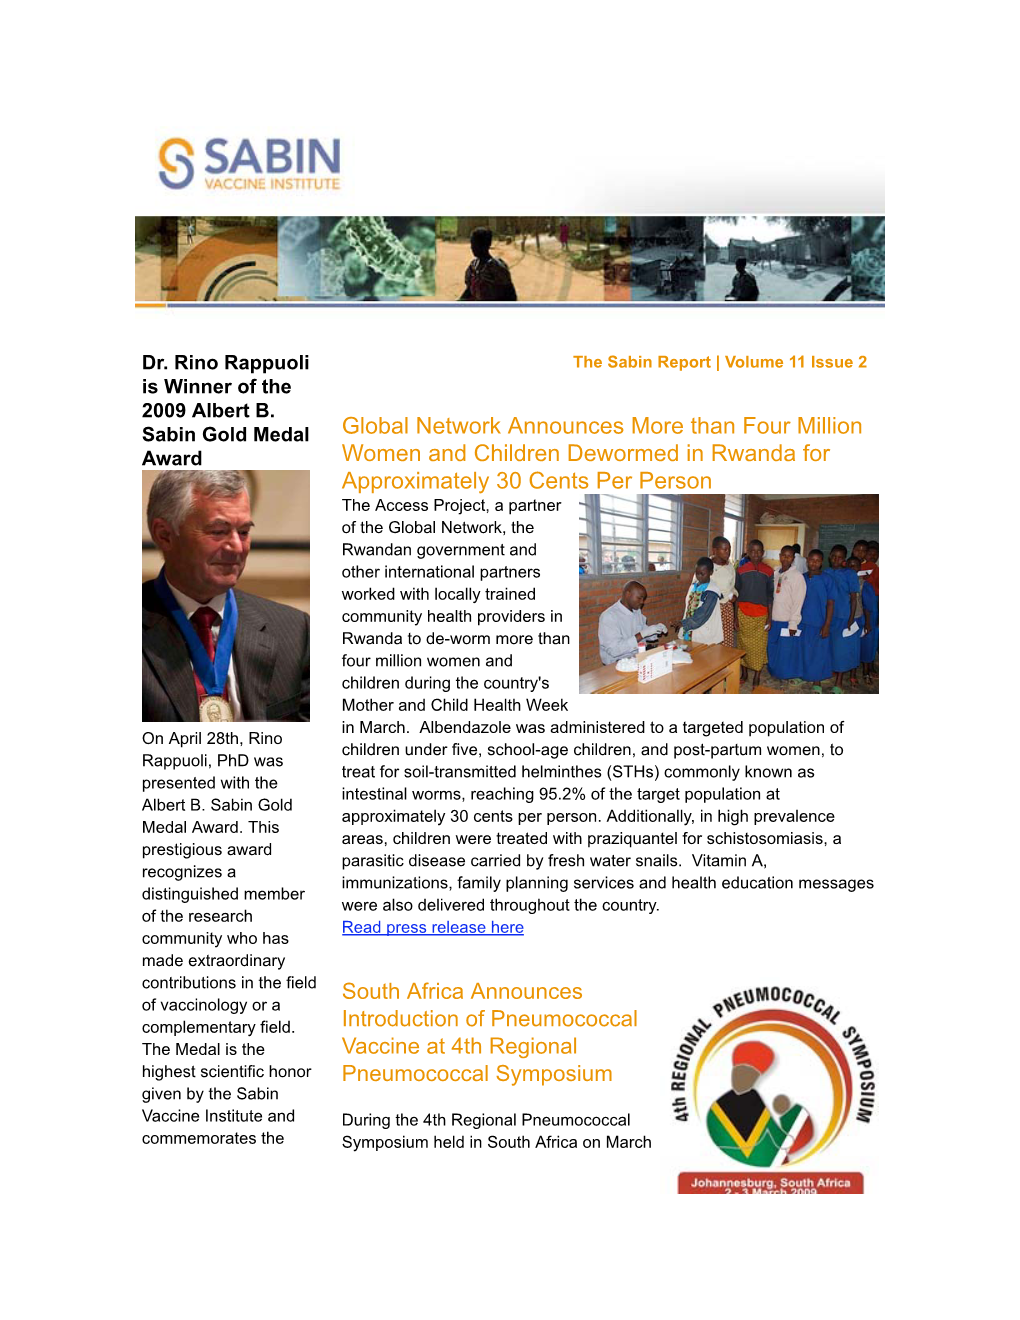 The Sabin Report | Volume 11 Issue 2 Is Winner of the 2009 Albert B